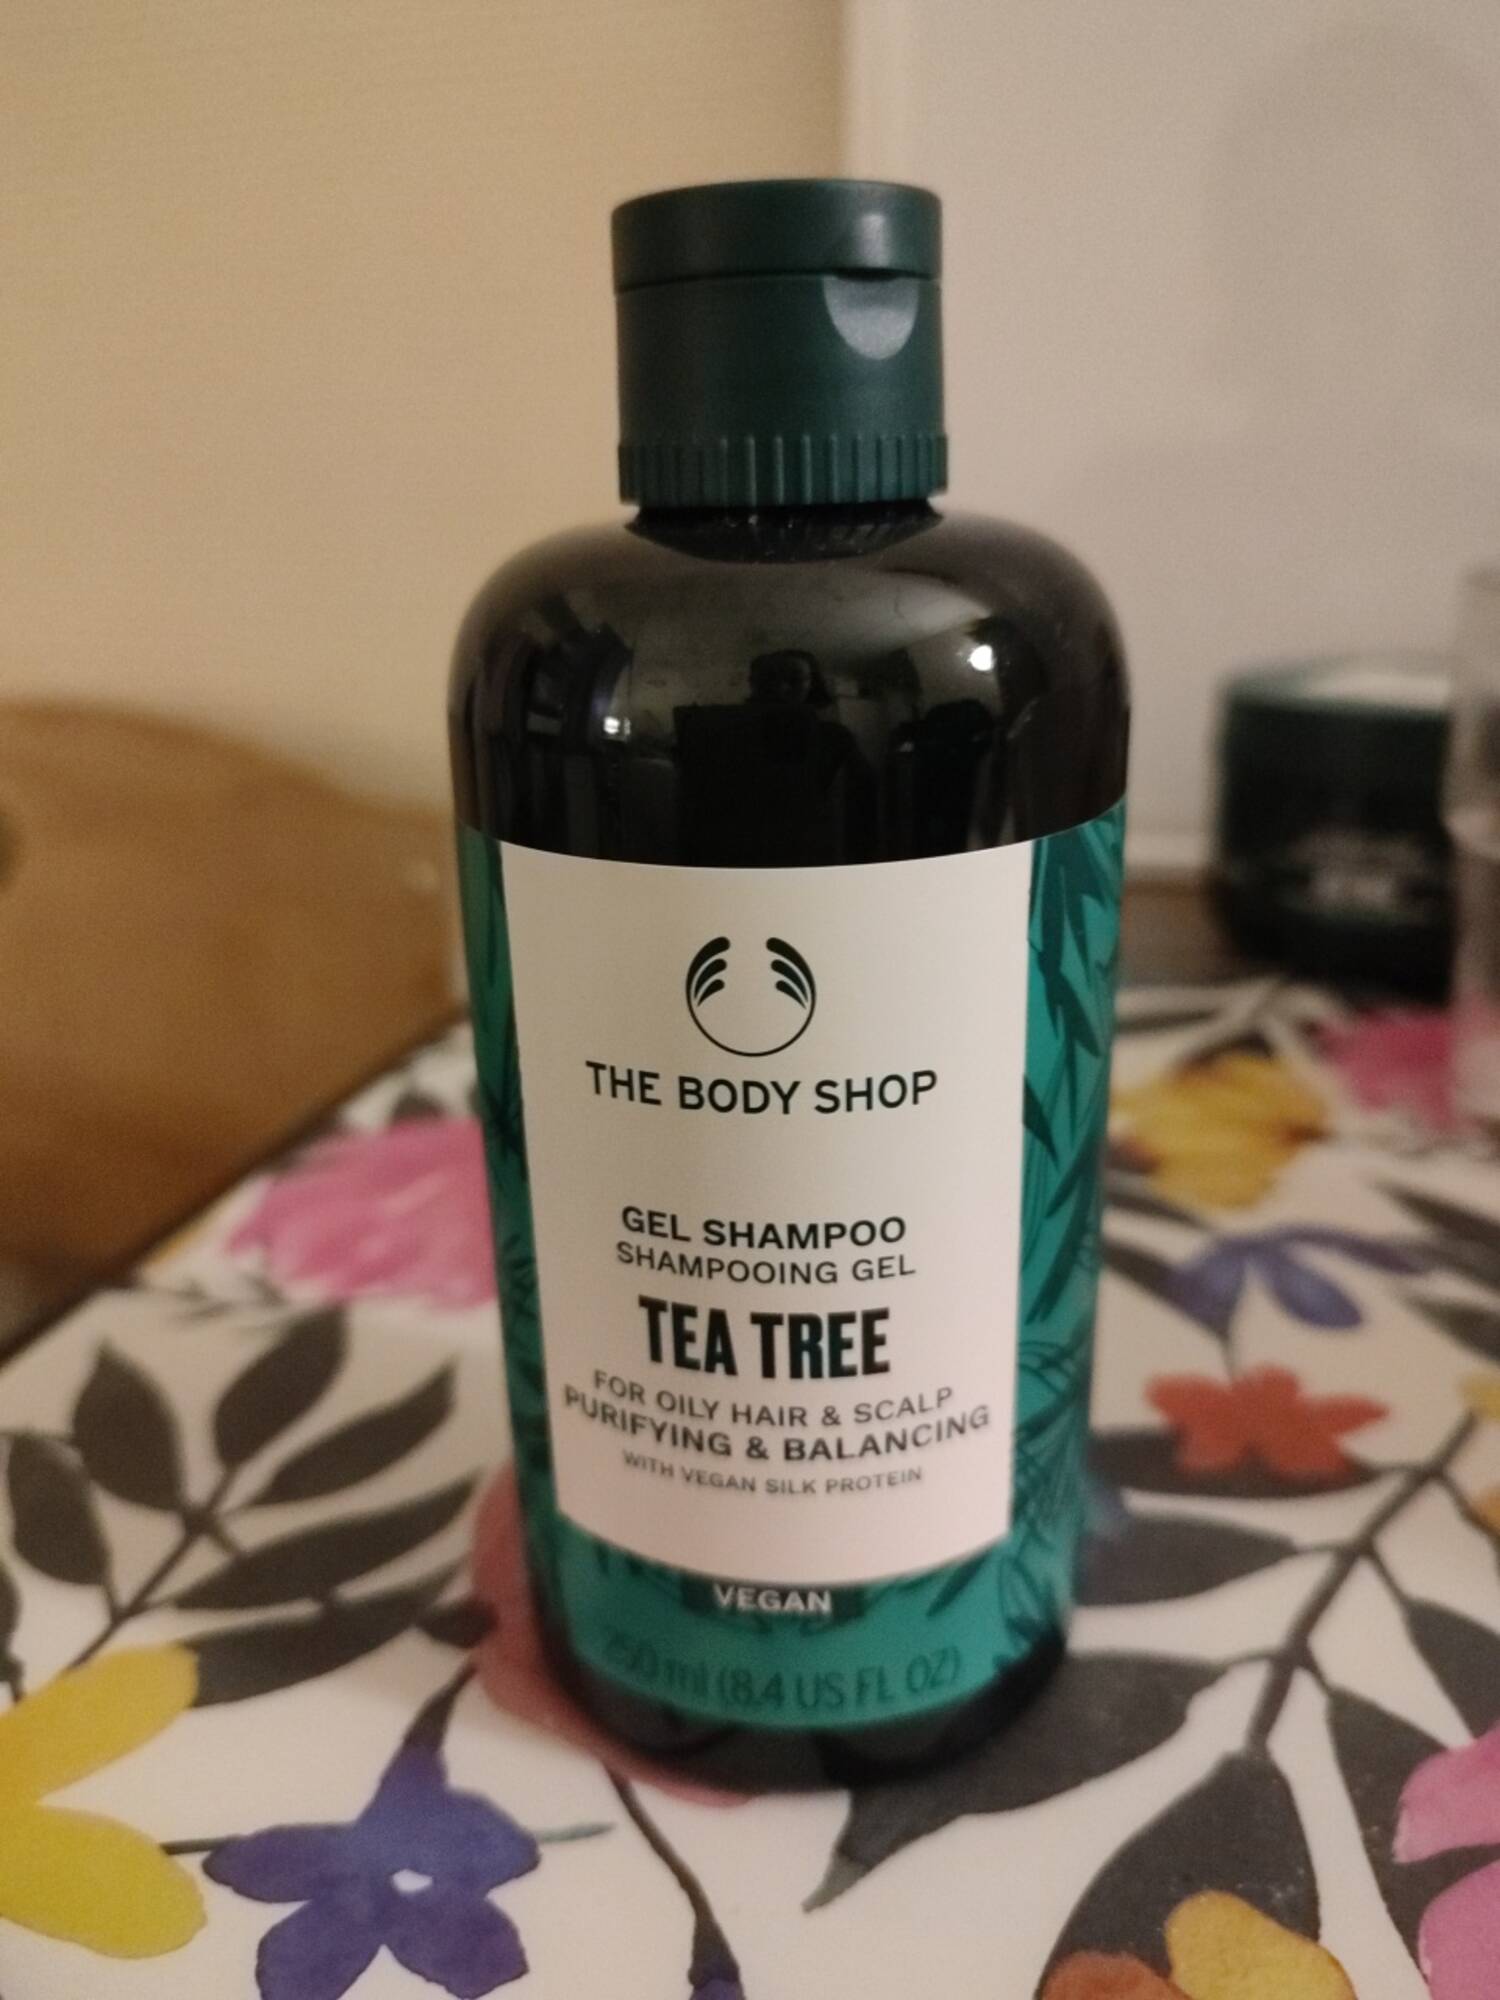 THE BODY SHOP - Tea tree - Shampooing gel